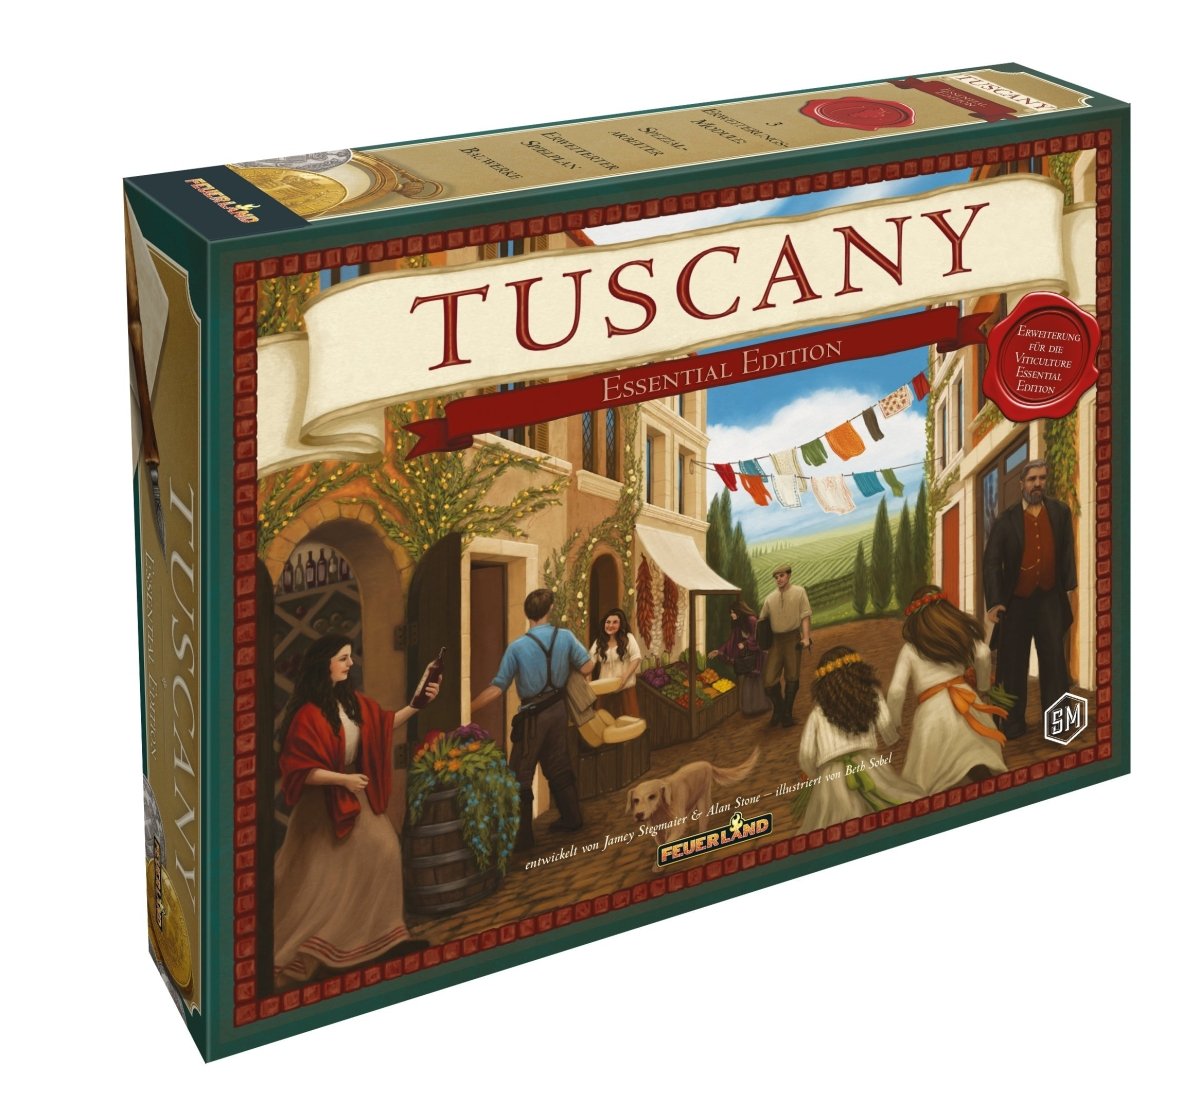 Tuscany Essential Edition - Spielefürst